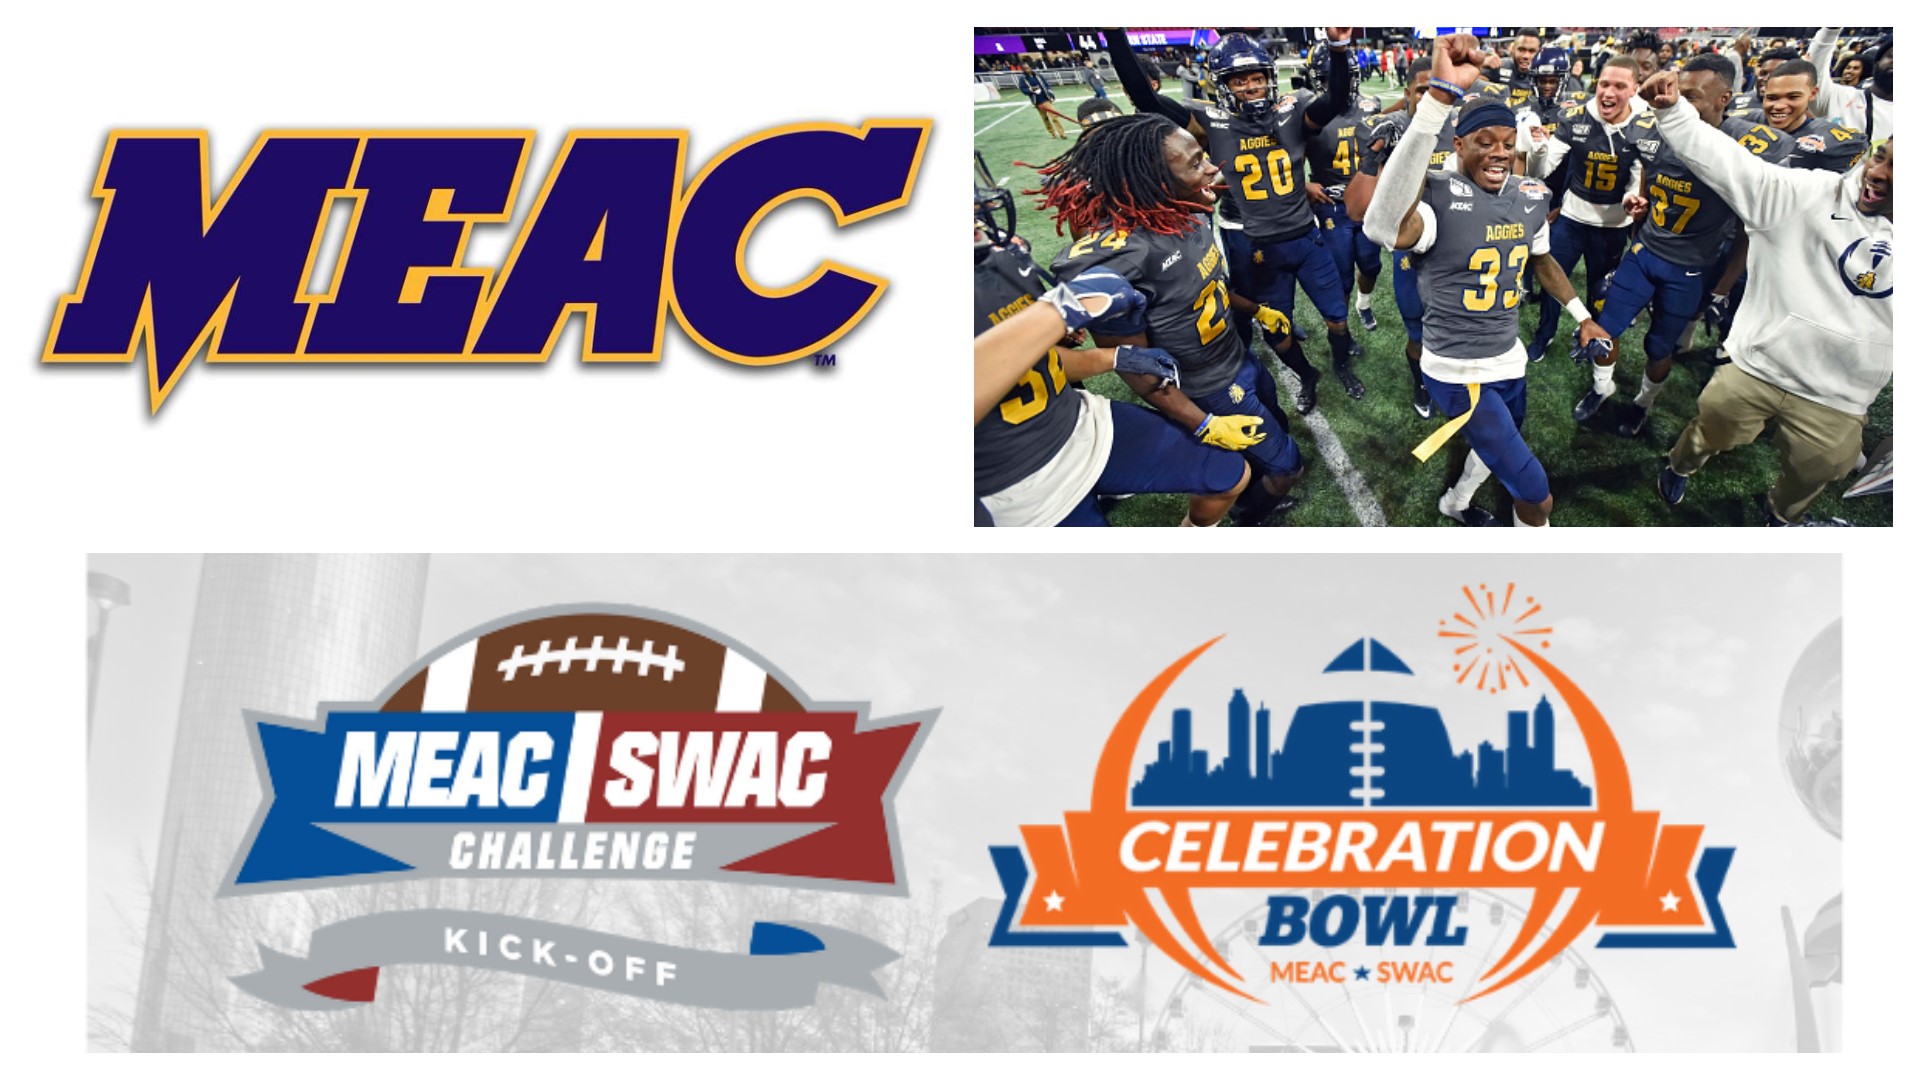 MEAC/SWAC Challenge & Celebration Bowl won't take place in 2020